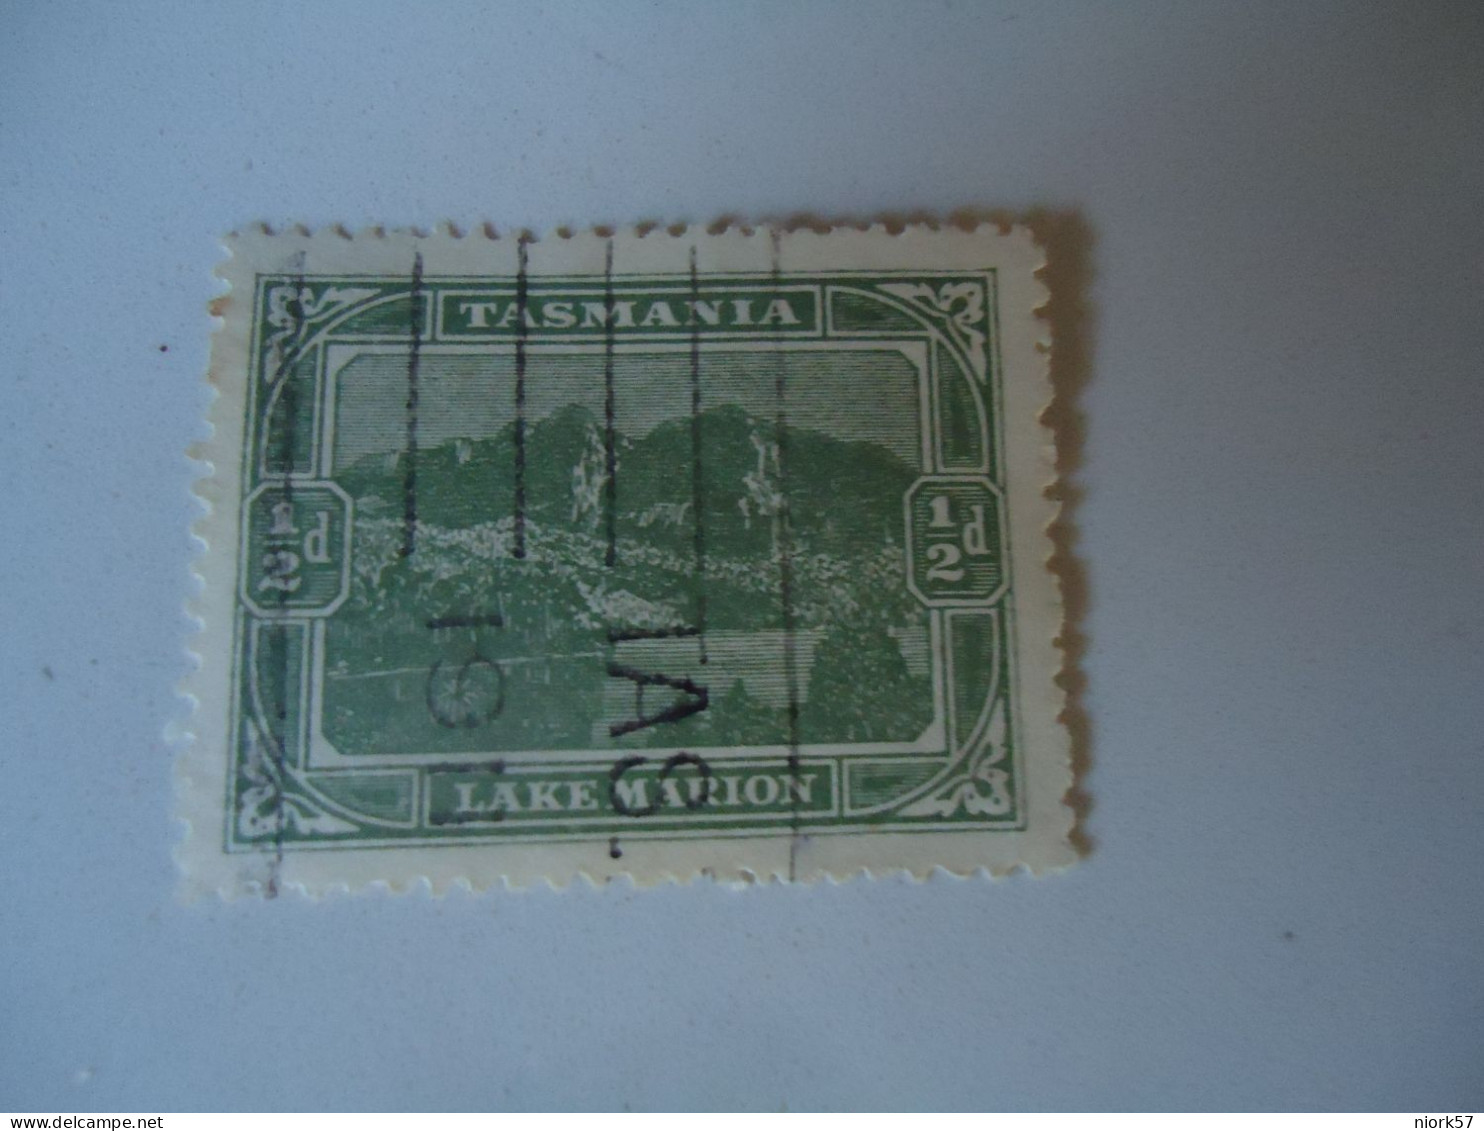 TASMANIA USED STAMPS   WITH POSTMARK  LAKE  1899 - Used Stamps